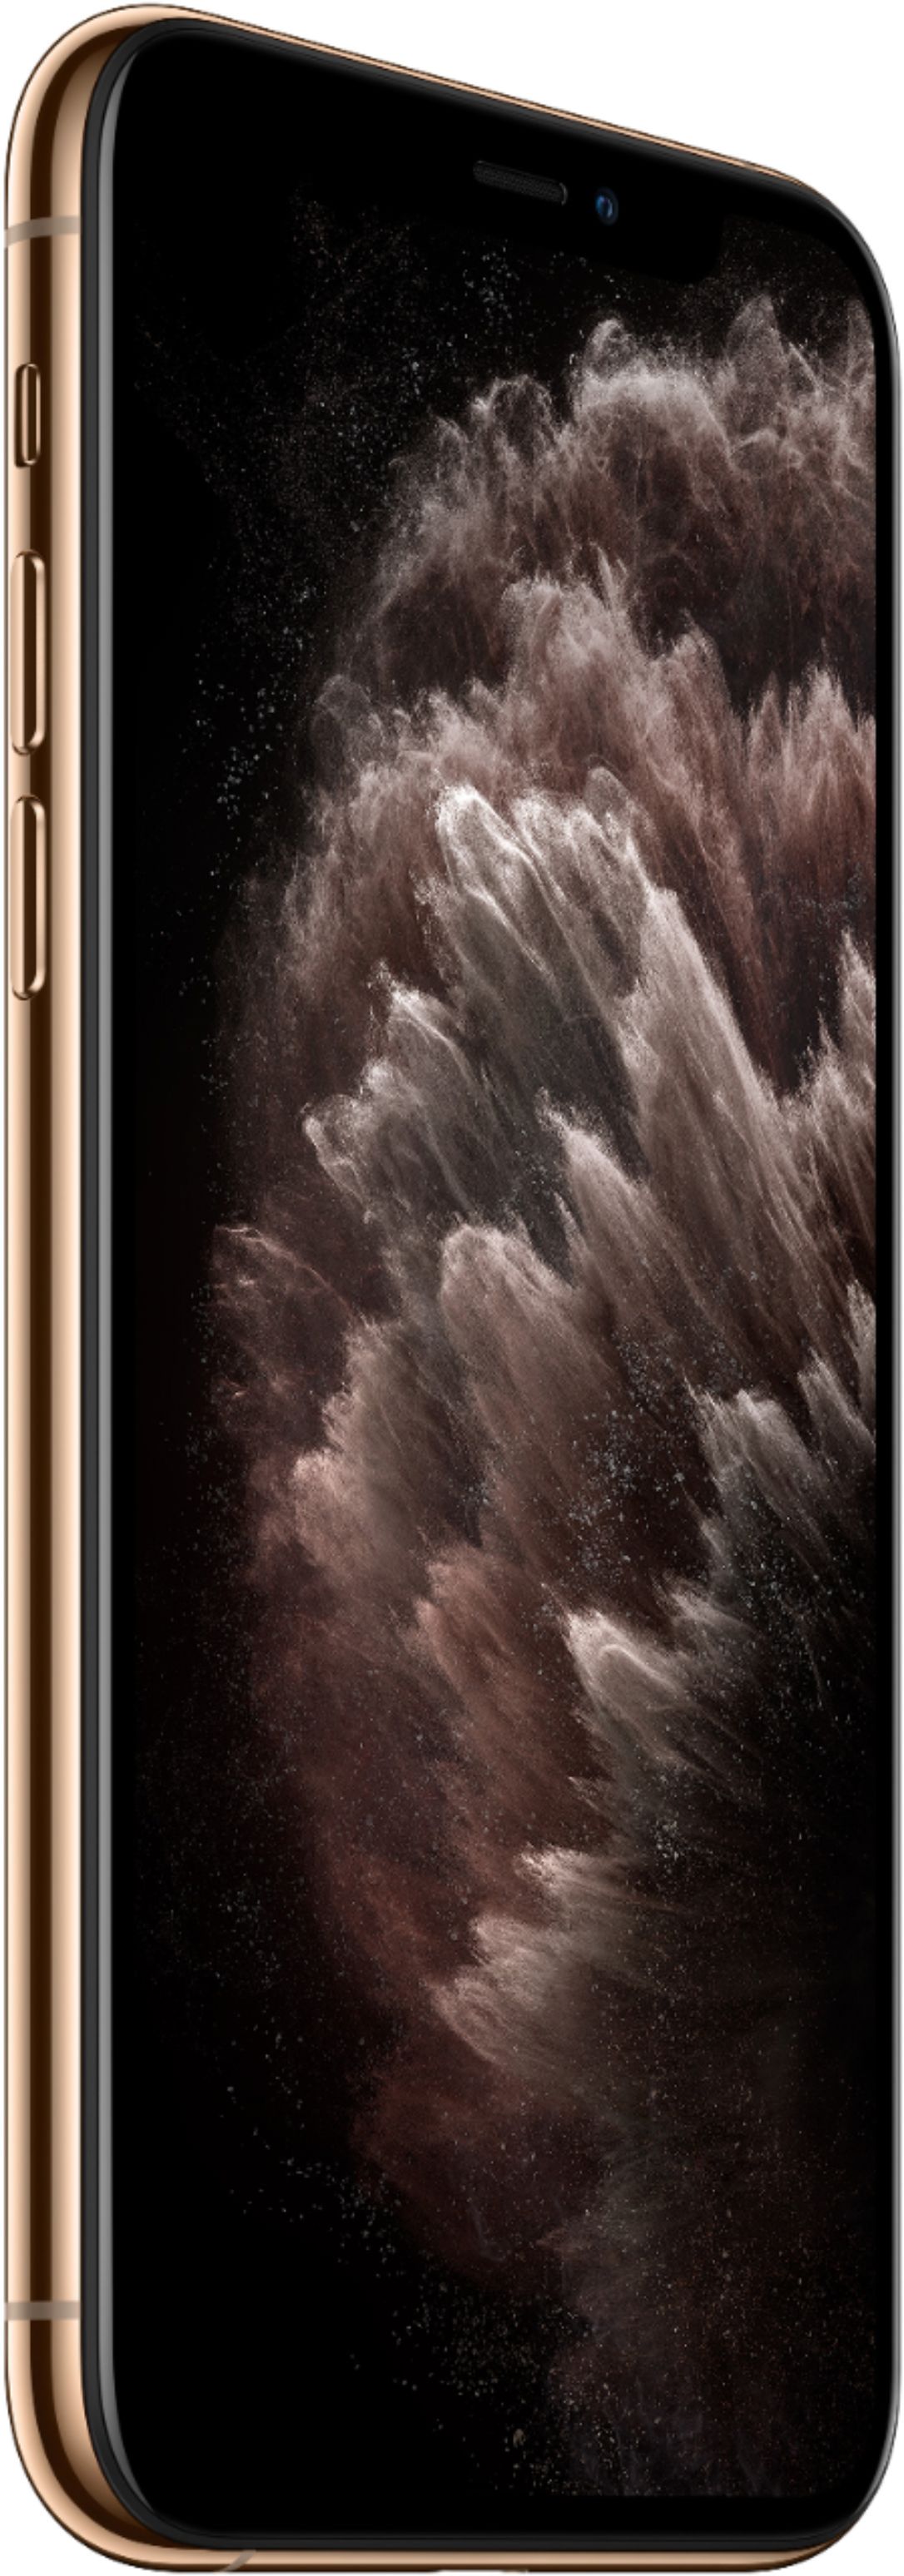 Apple Iphone 11 Pro 64gb Gold Verizon Mwck2ll A Best Buy